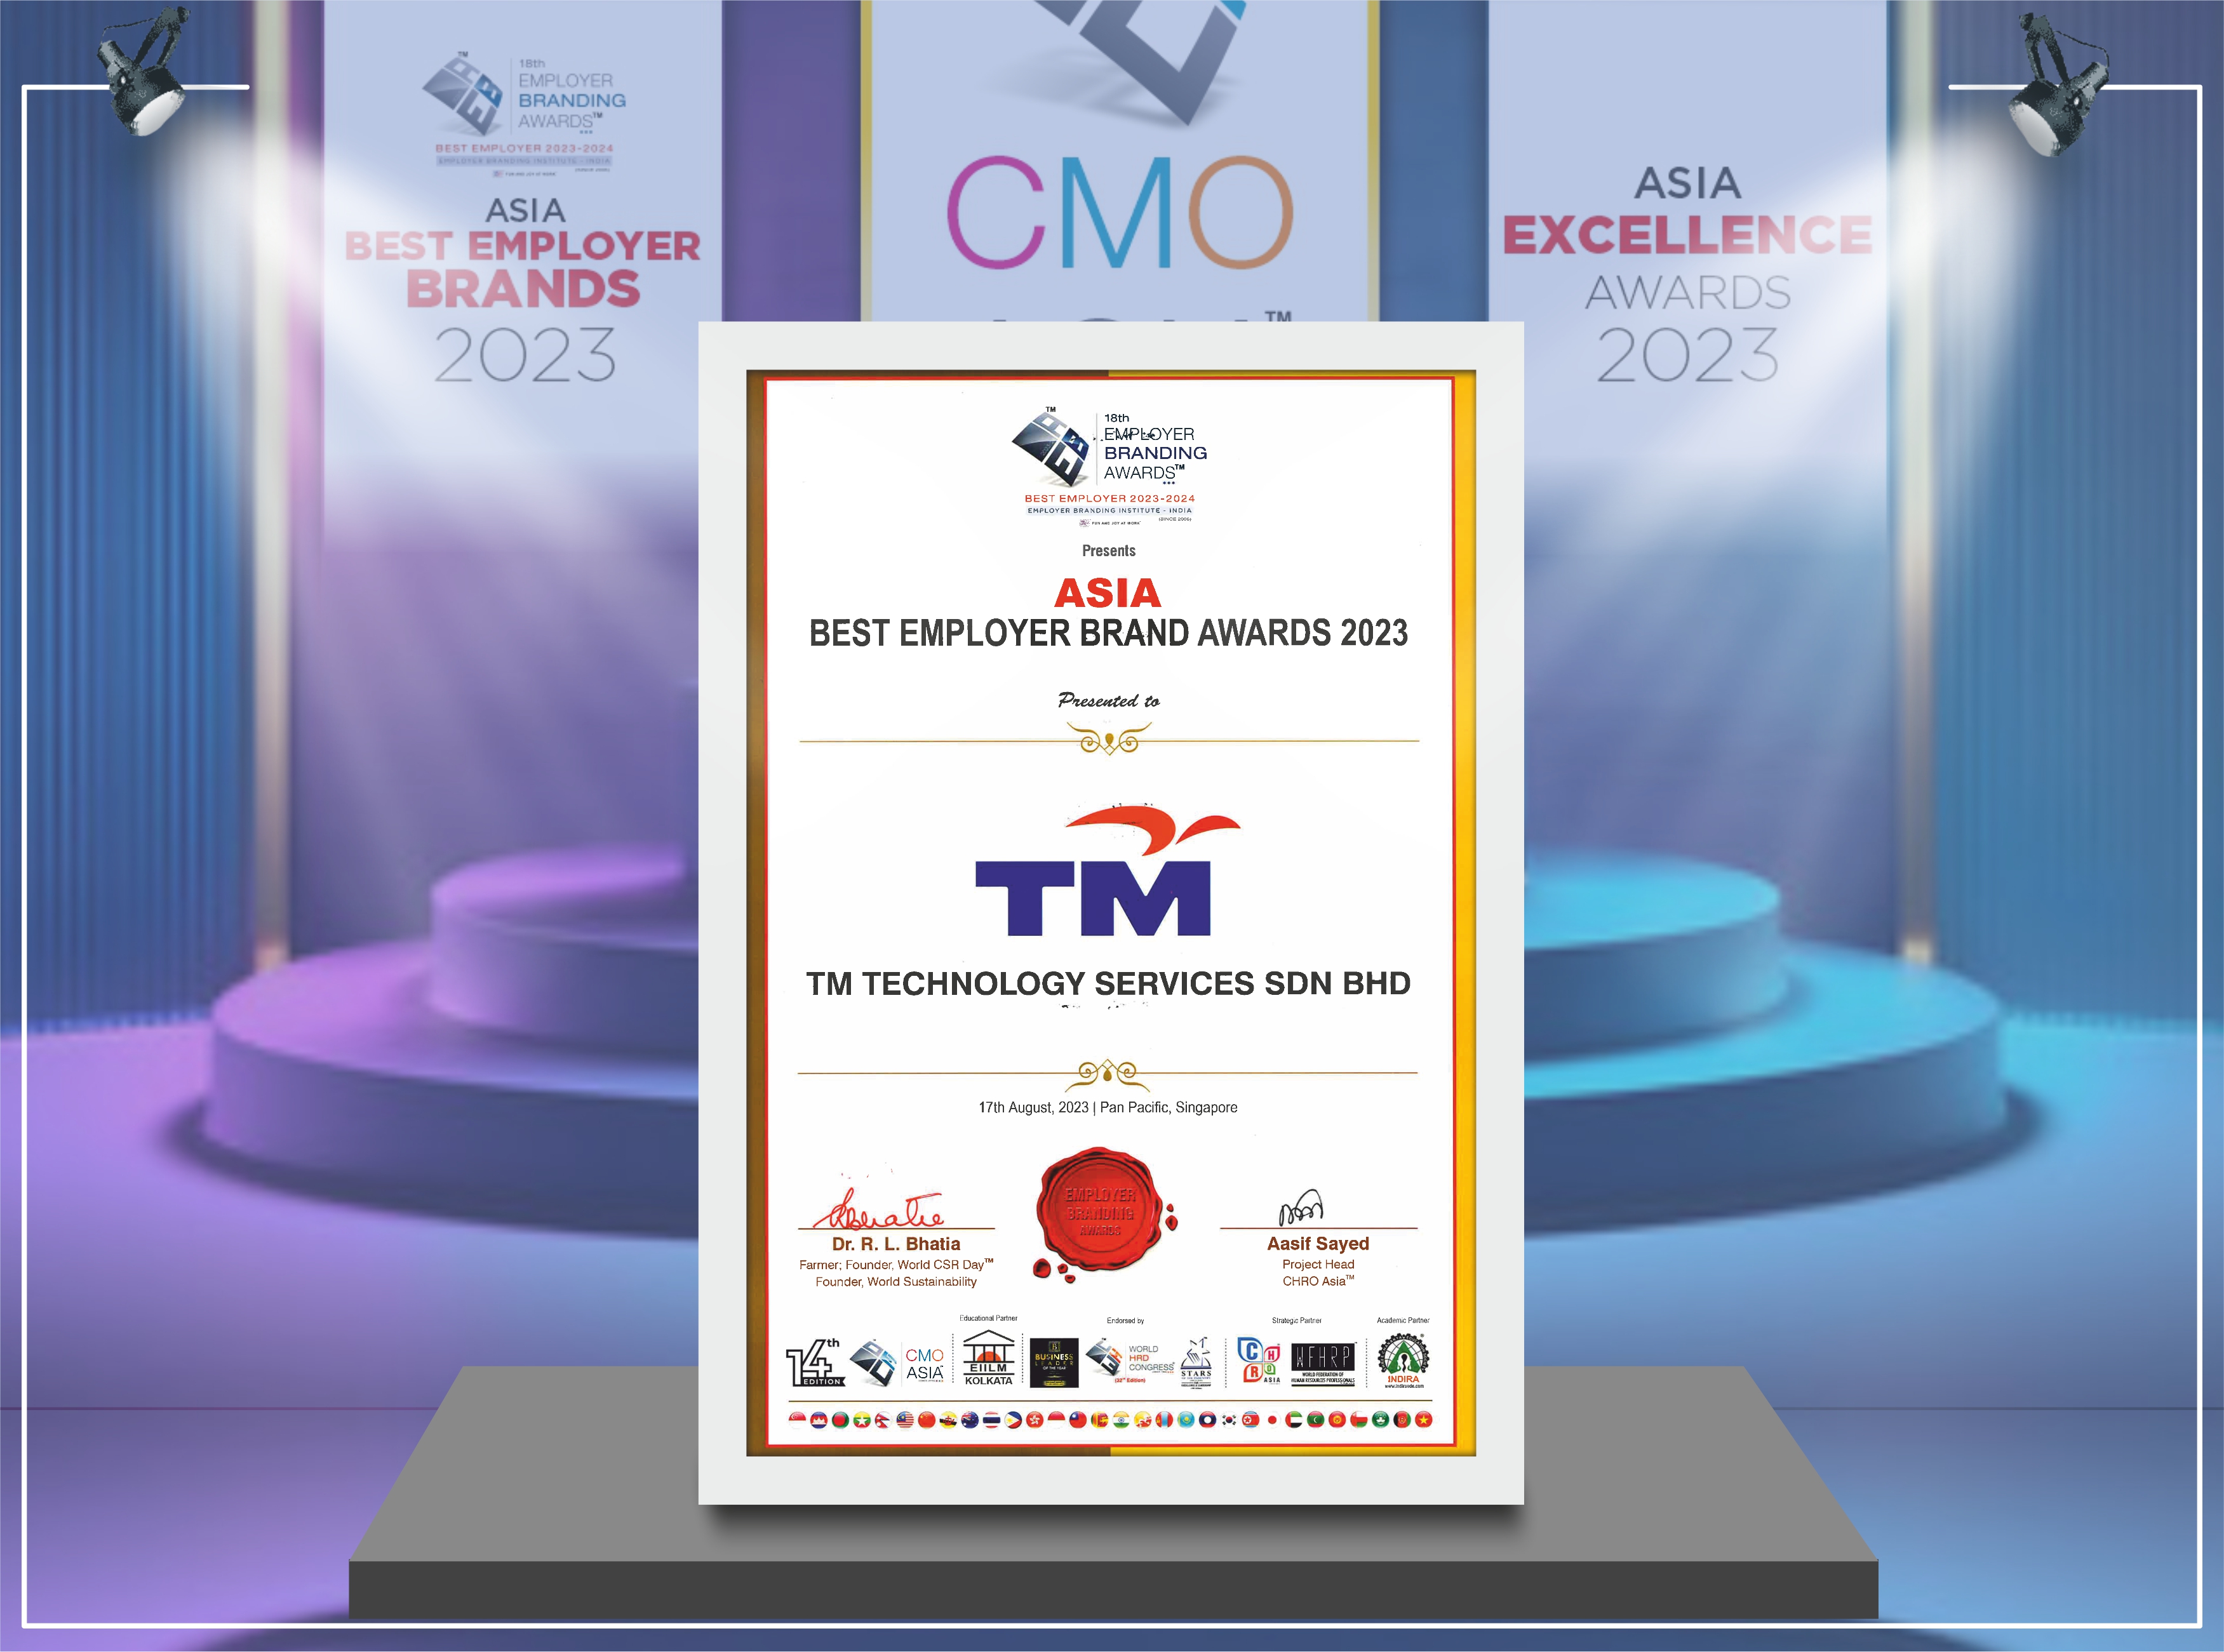 TM Wins Asia Best Employer Brand Awards 2023 Telekom Malaysia